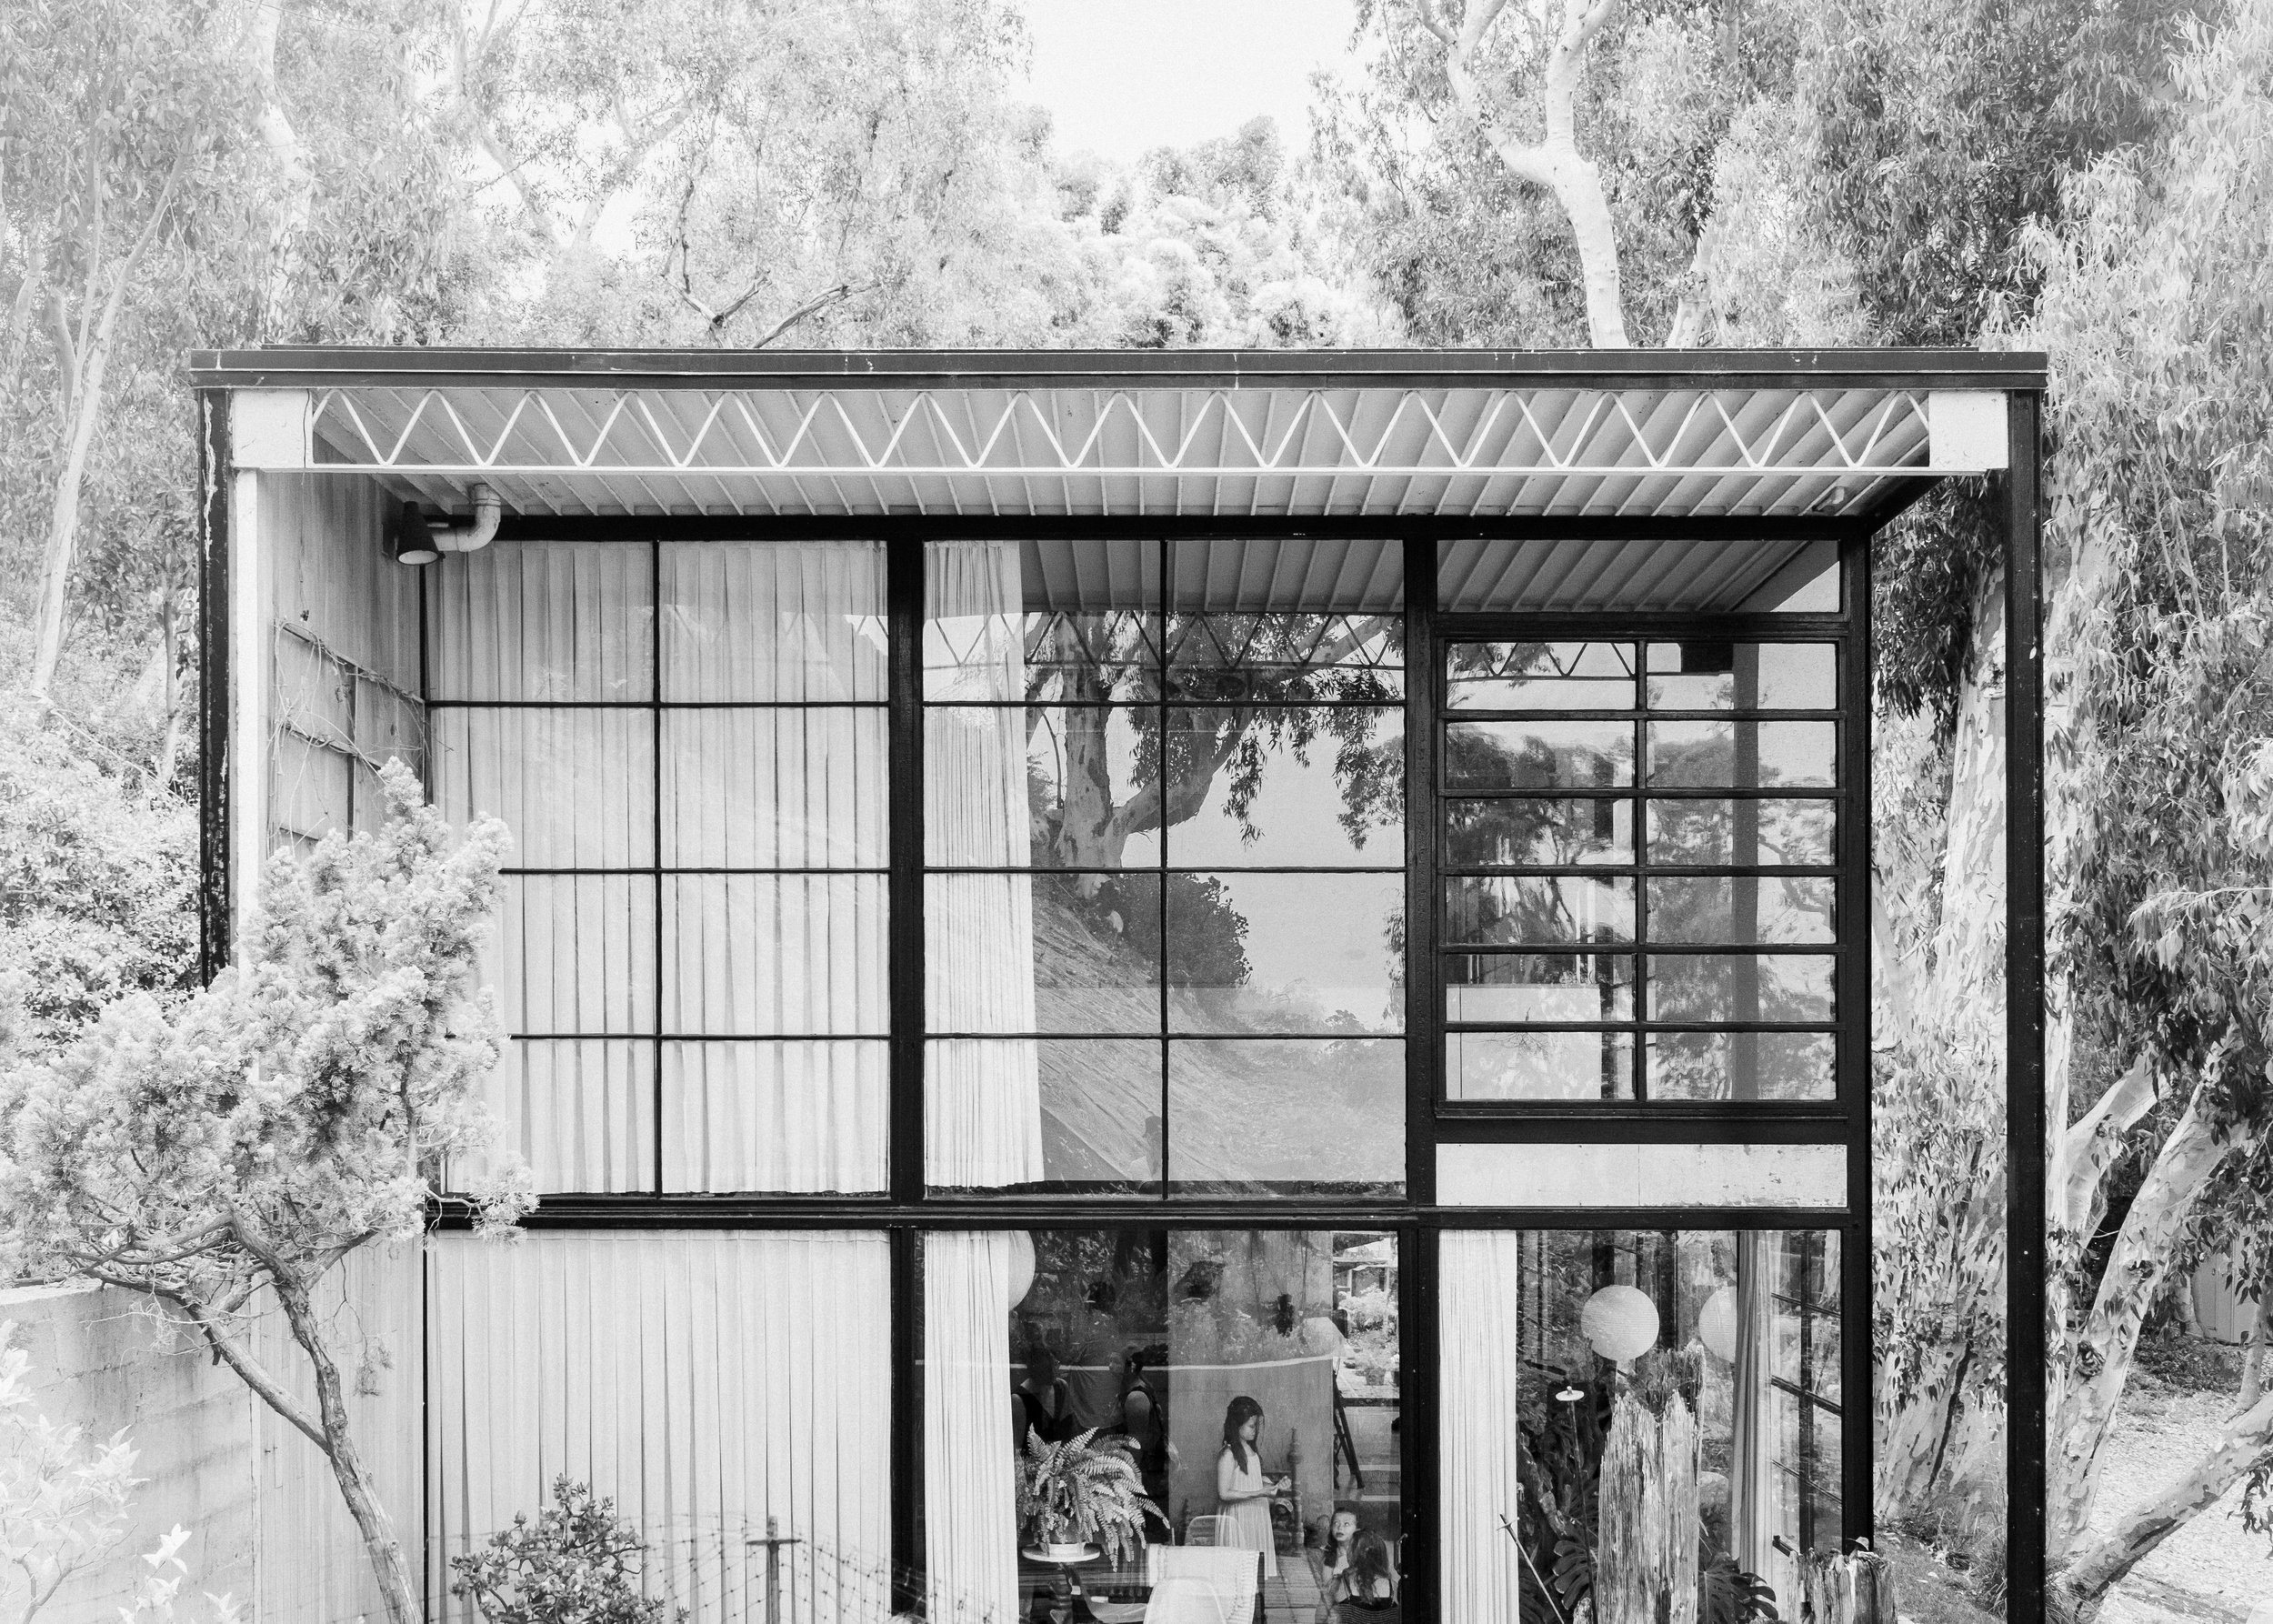 The Eames House